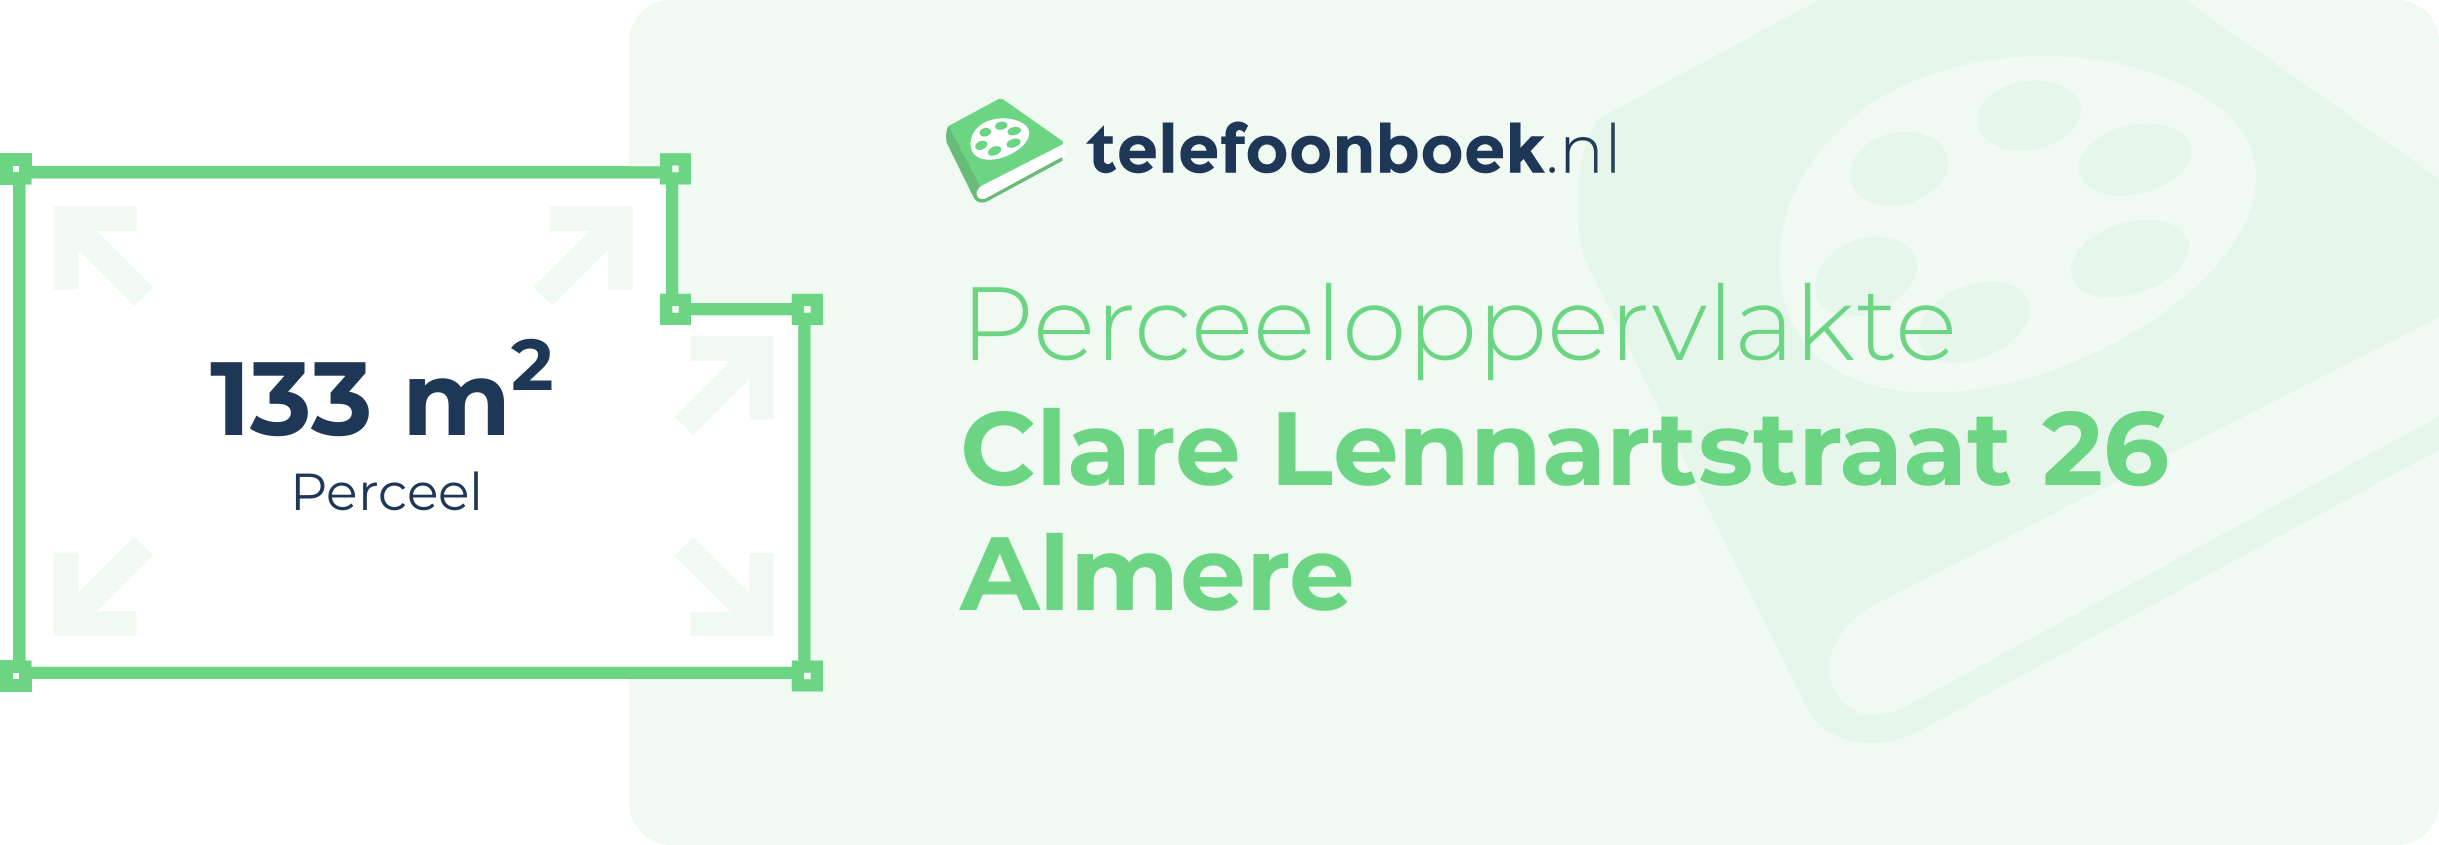 Perceeloppervlakte Clare Lennartstraat 26 Almere